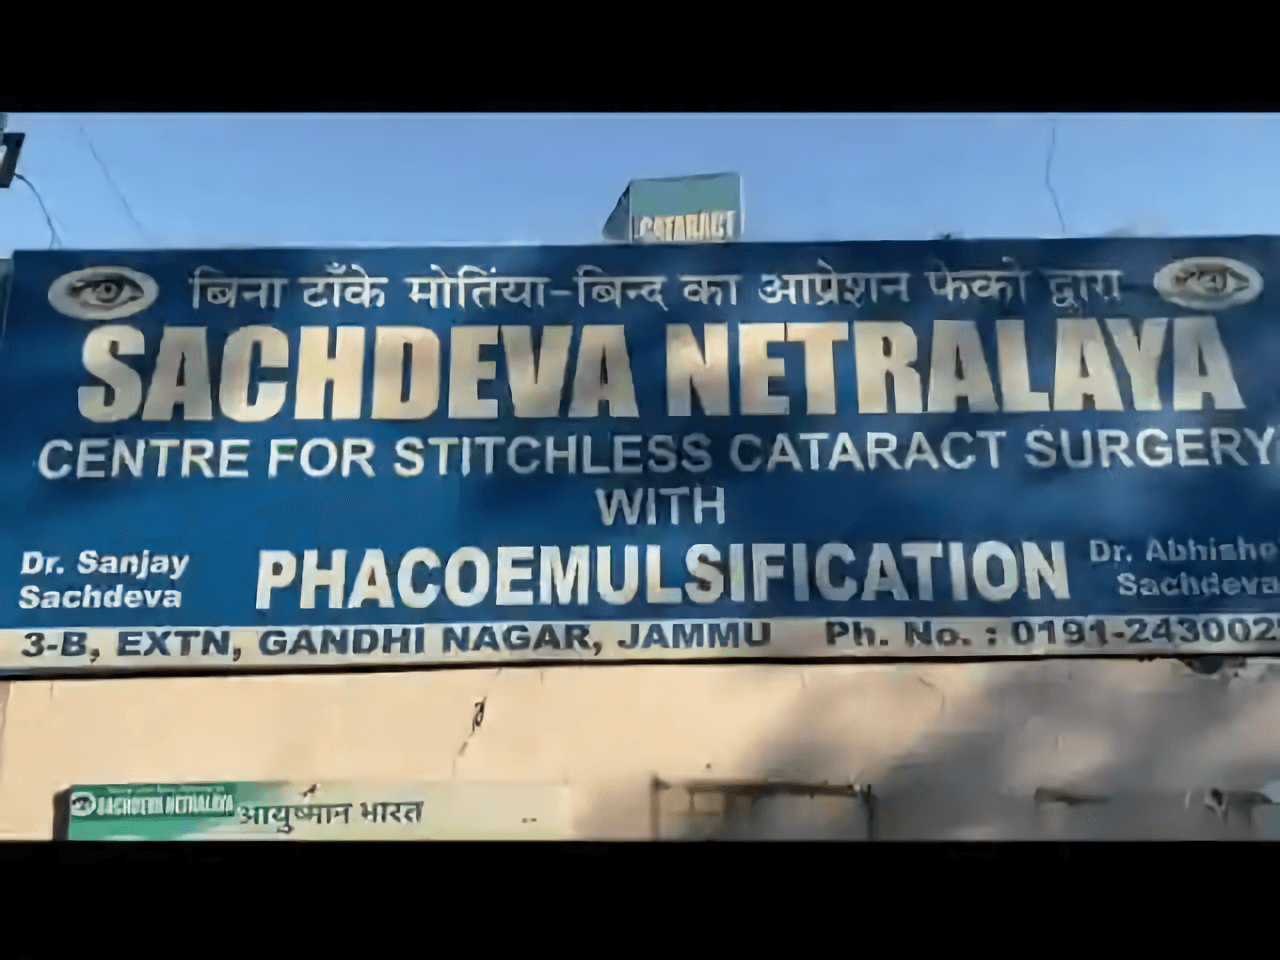 Sachdeva Netralaya